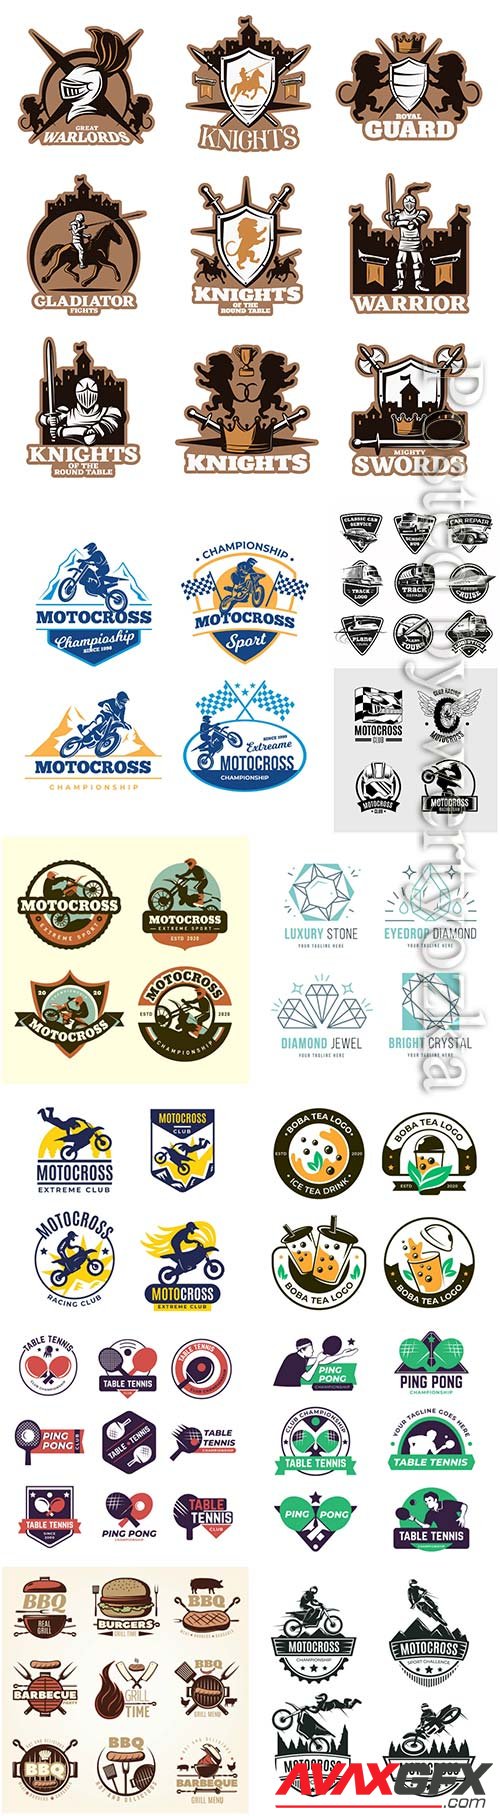 Logos in vector